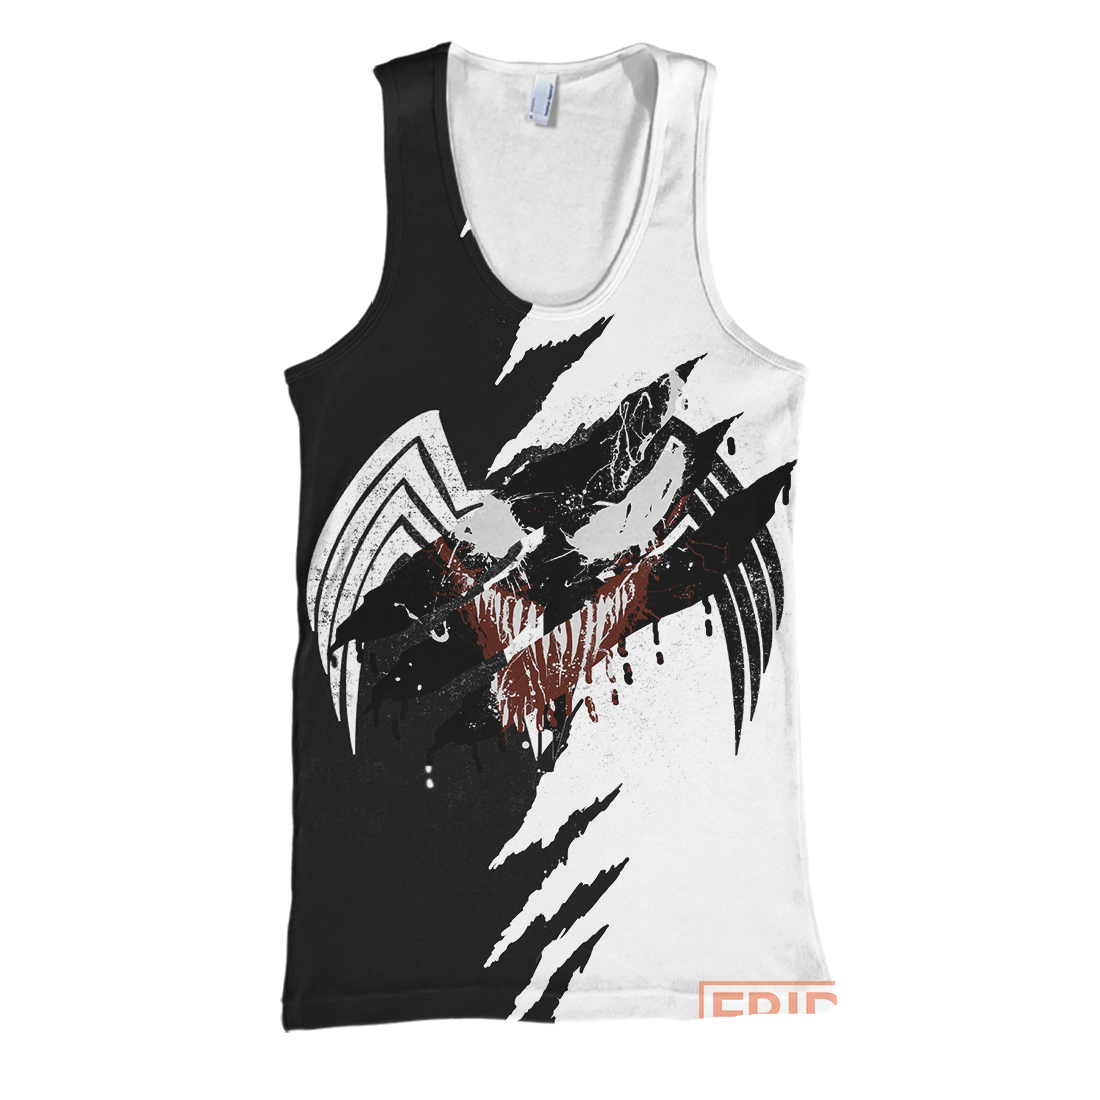 Unifinz Venom MV T-shirt Venom Black & White T-shirt MV Venom Hoodie Sweater Tank 2026